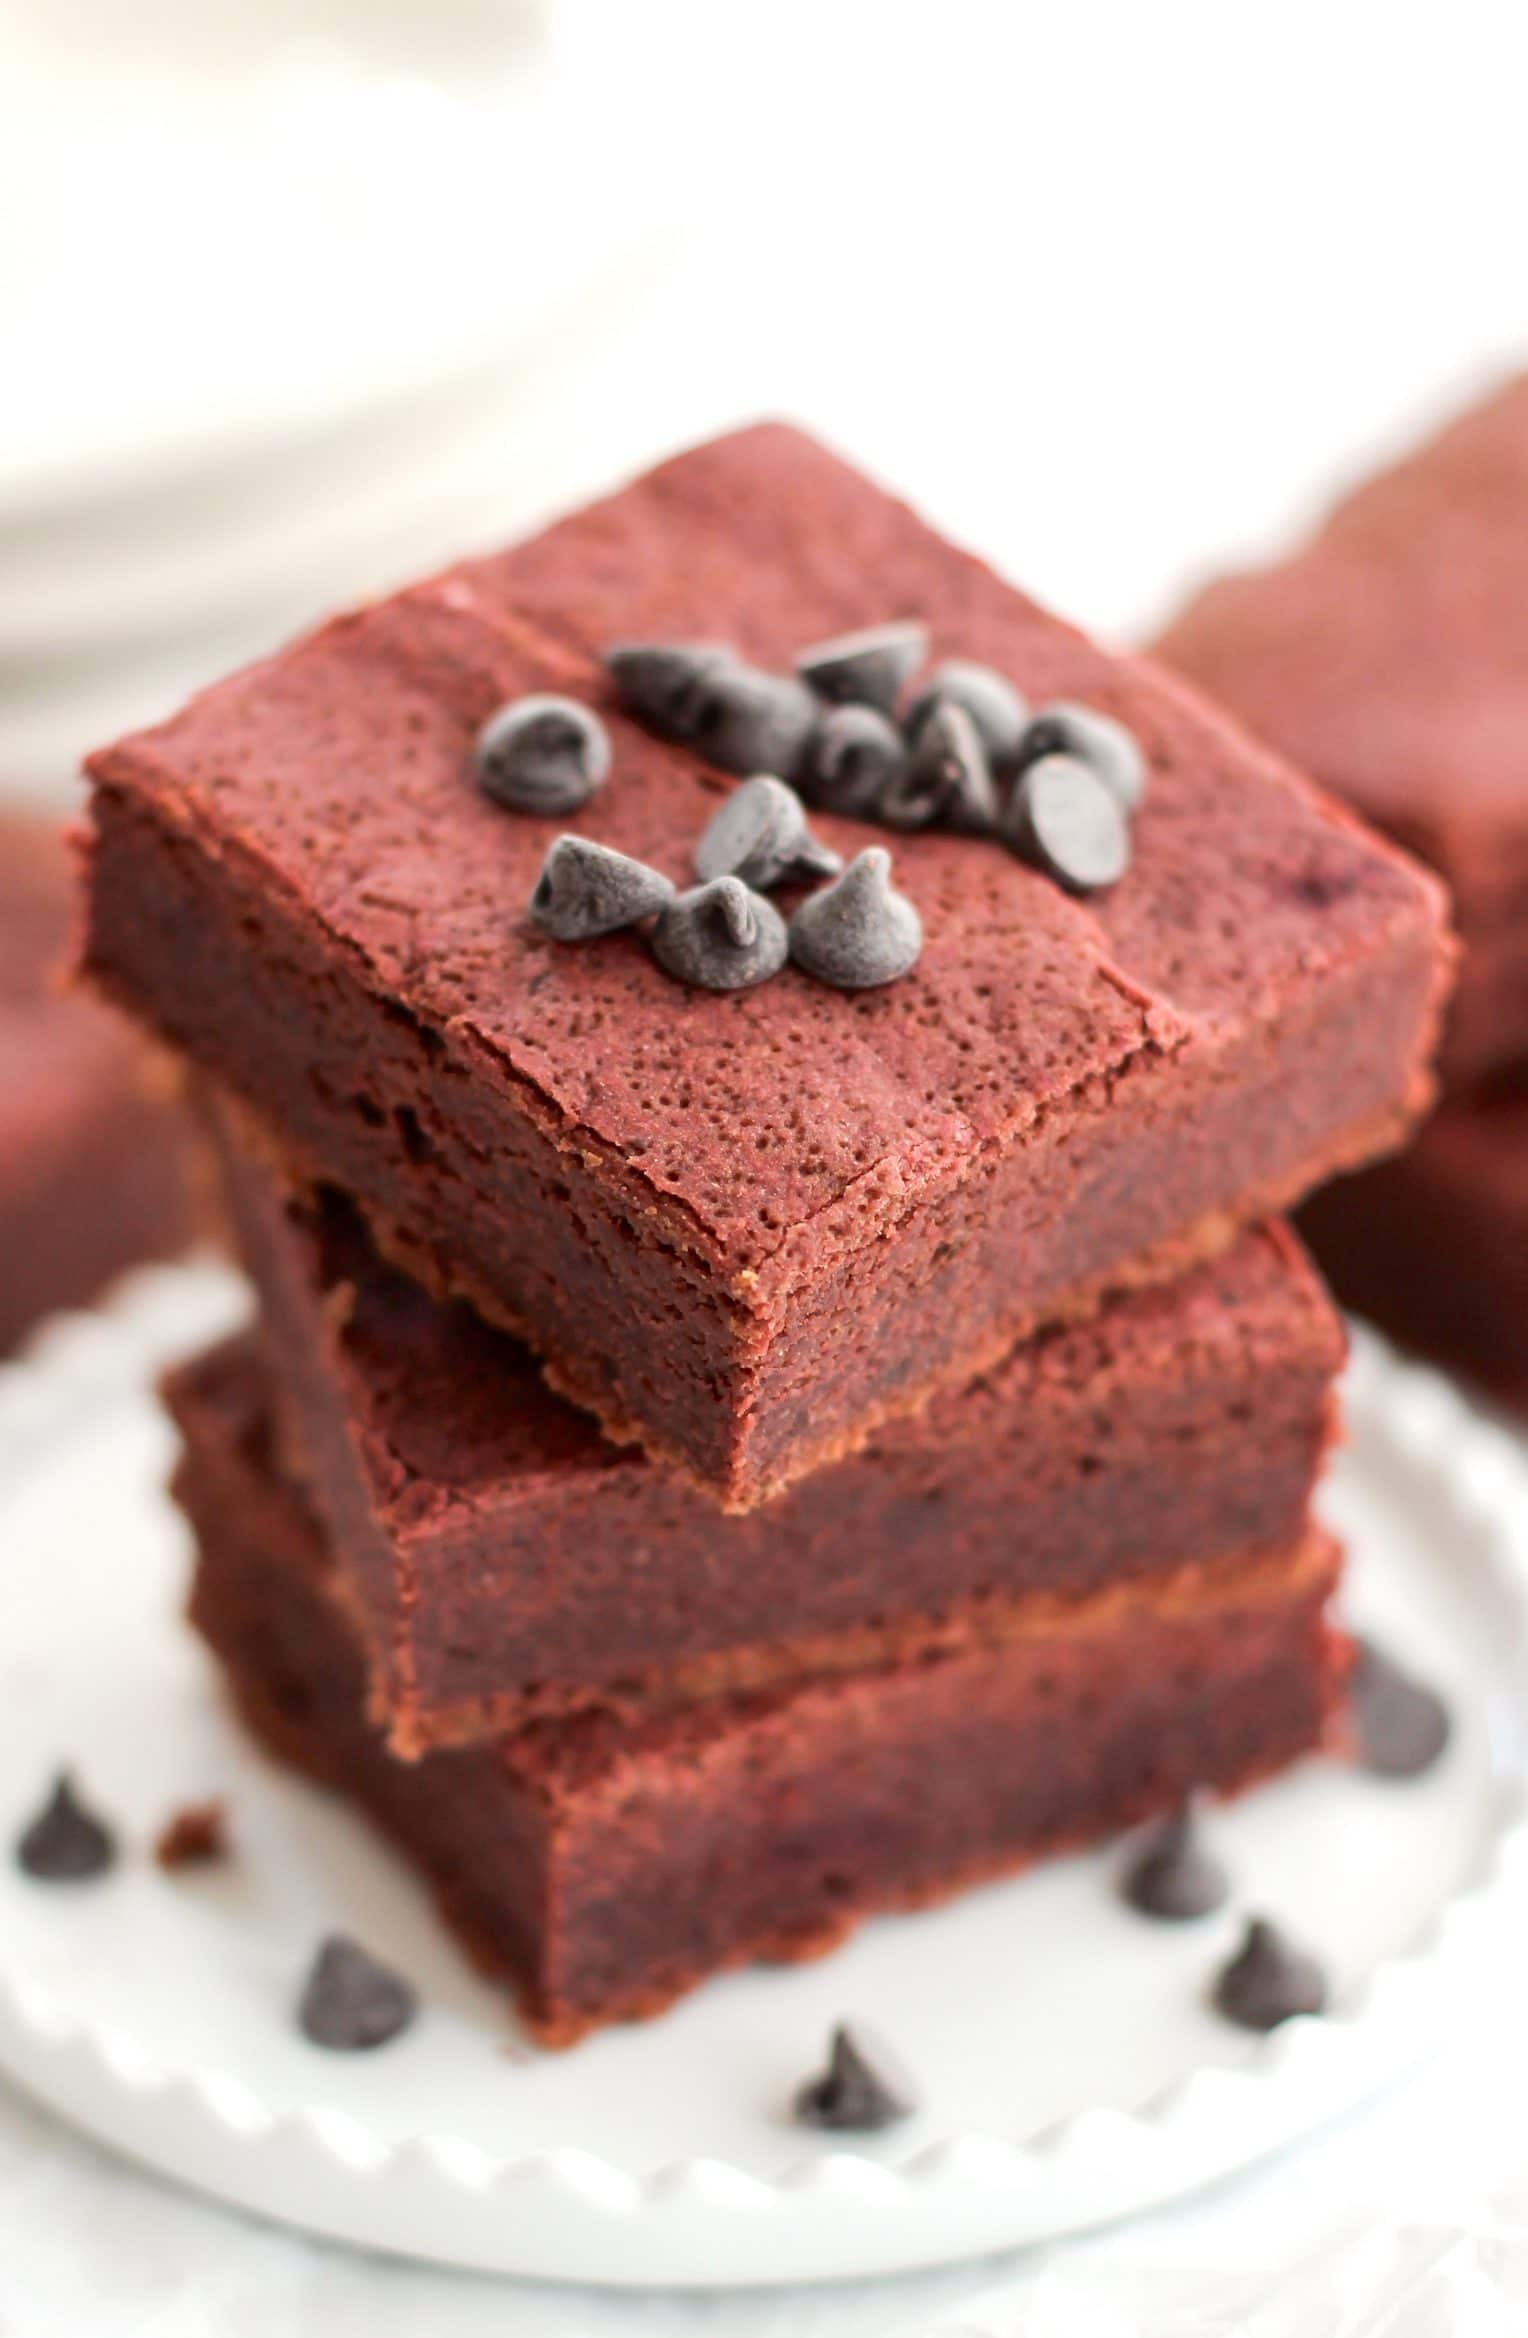 Healthy Red Velvet Brownies (refined sugar free, gluten free, vegan) - Healthy Dessert Recipes at Desserts with Benefits